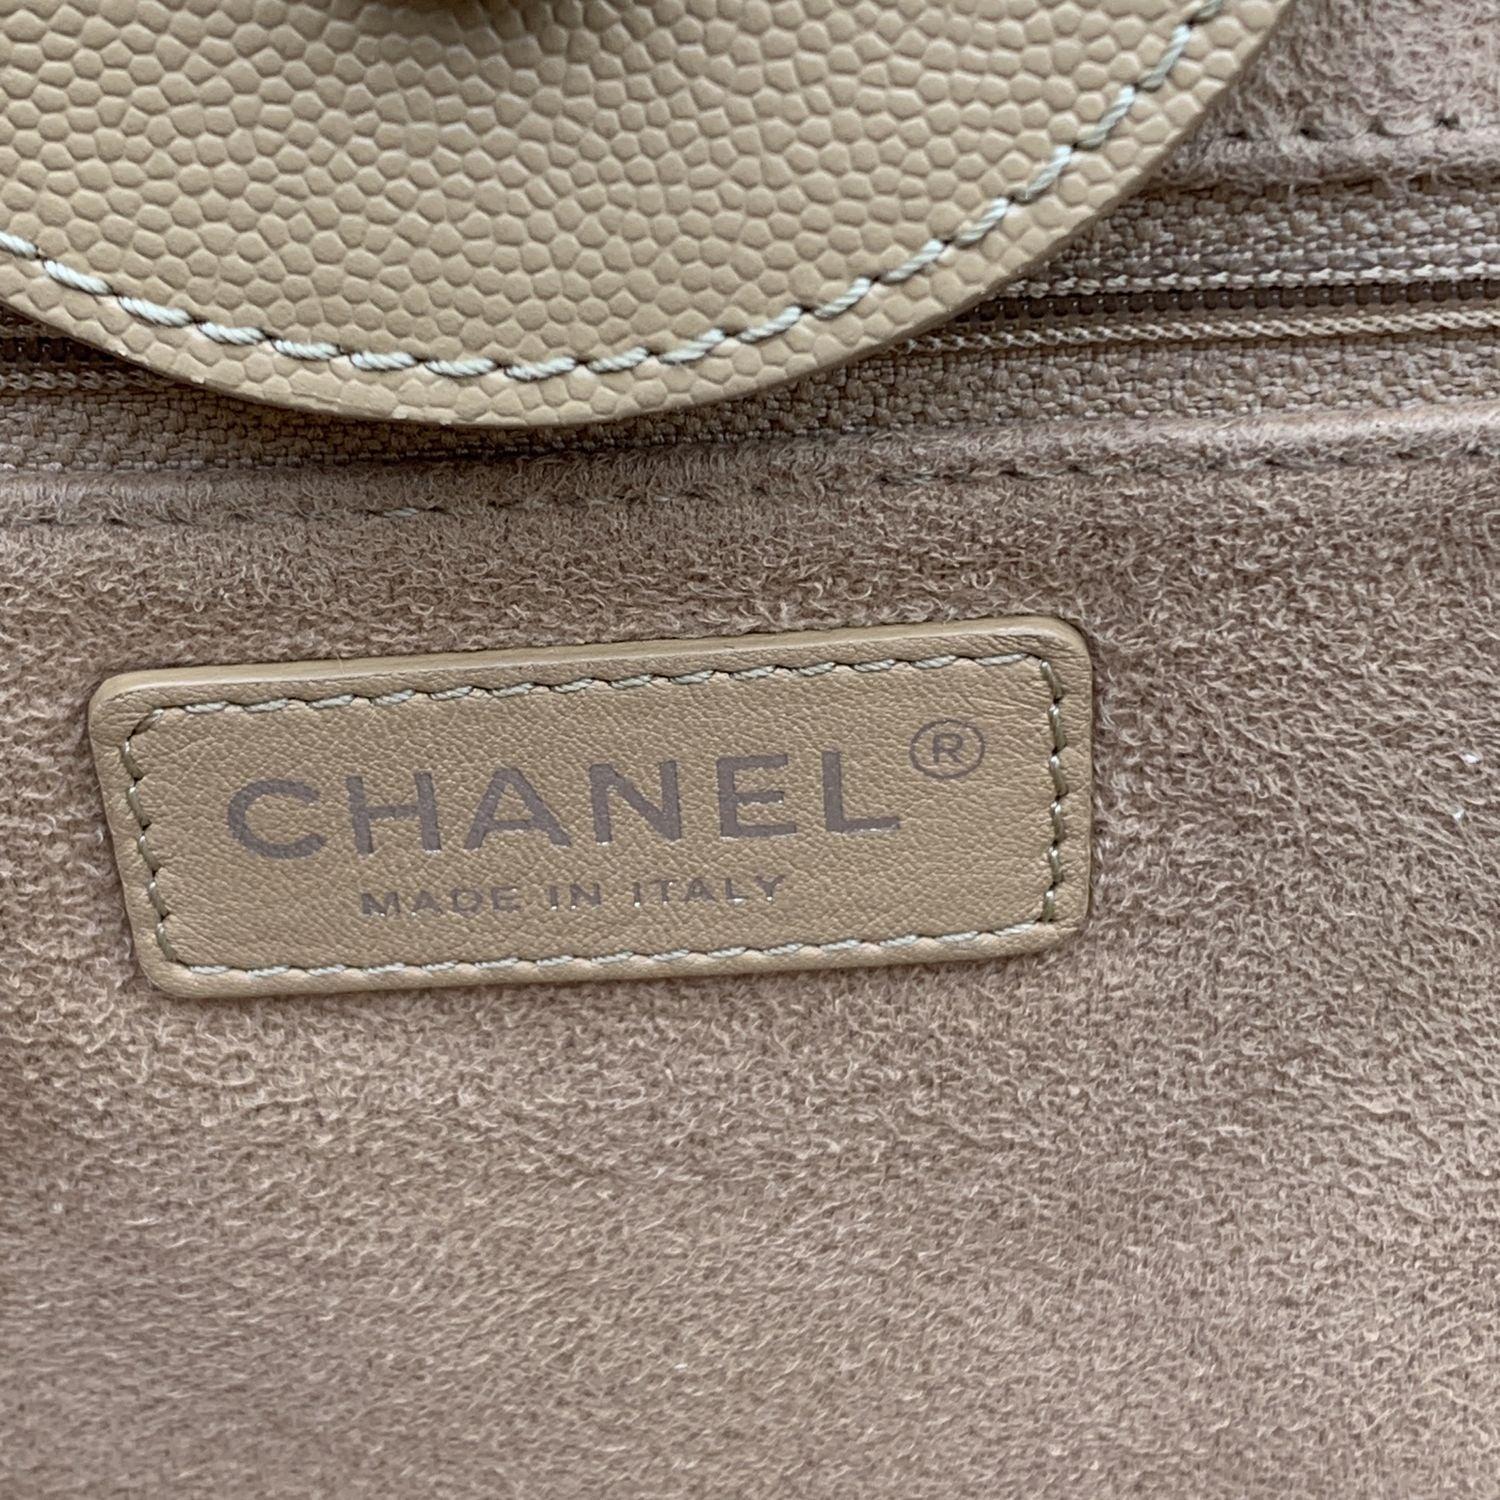 Chanel Beige Caviar Leather Studded Deauville Tote Shoulder Bag 4